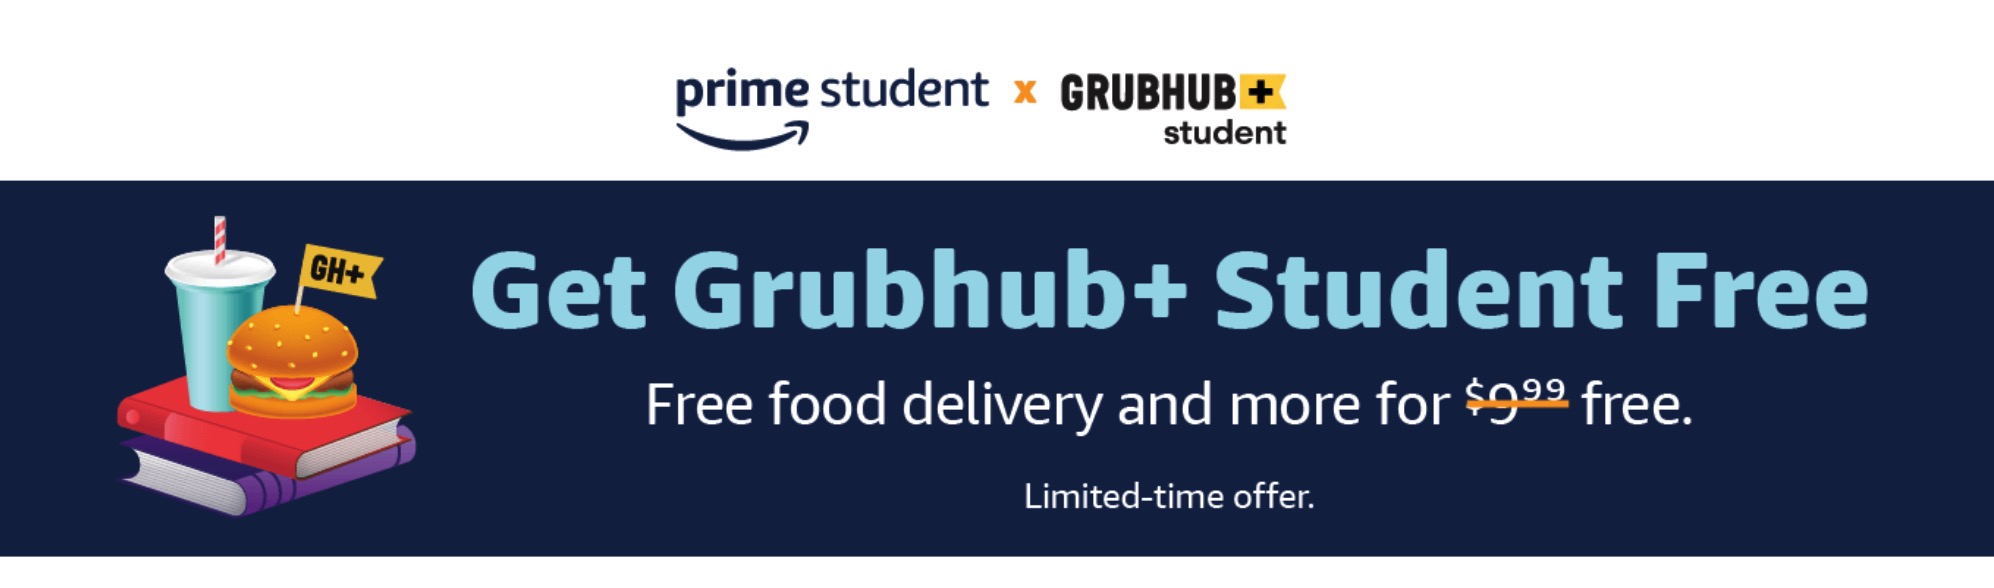 Amazon Prime Student 会员新增福利 可免费获得grubhub 学生会员 北美羊毛快报